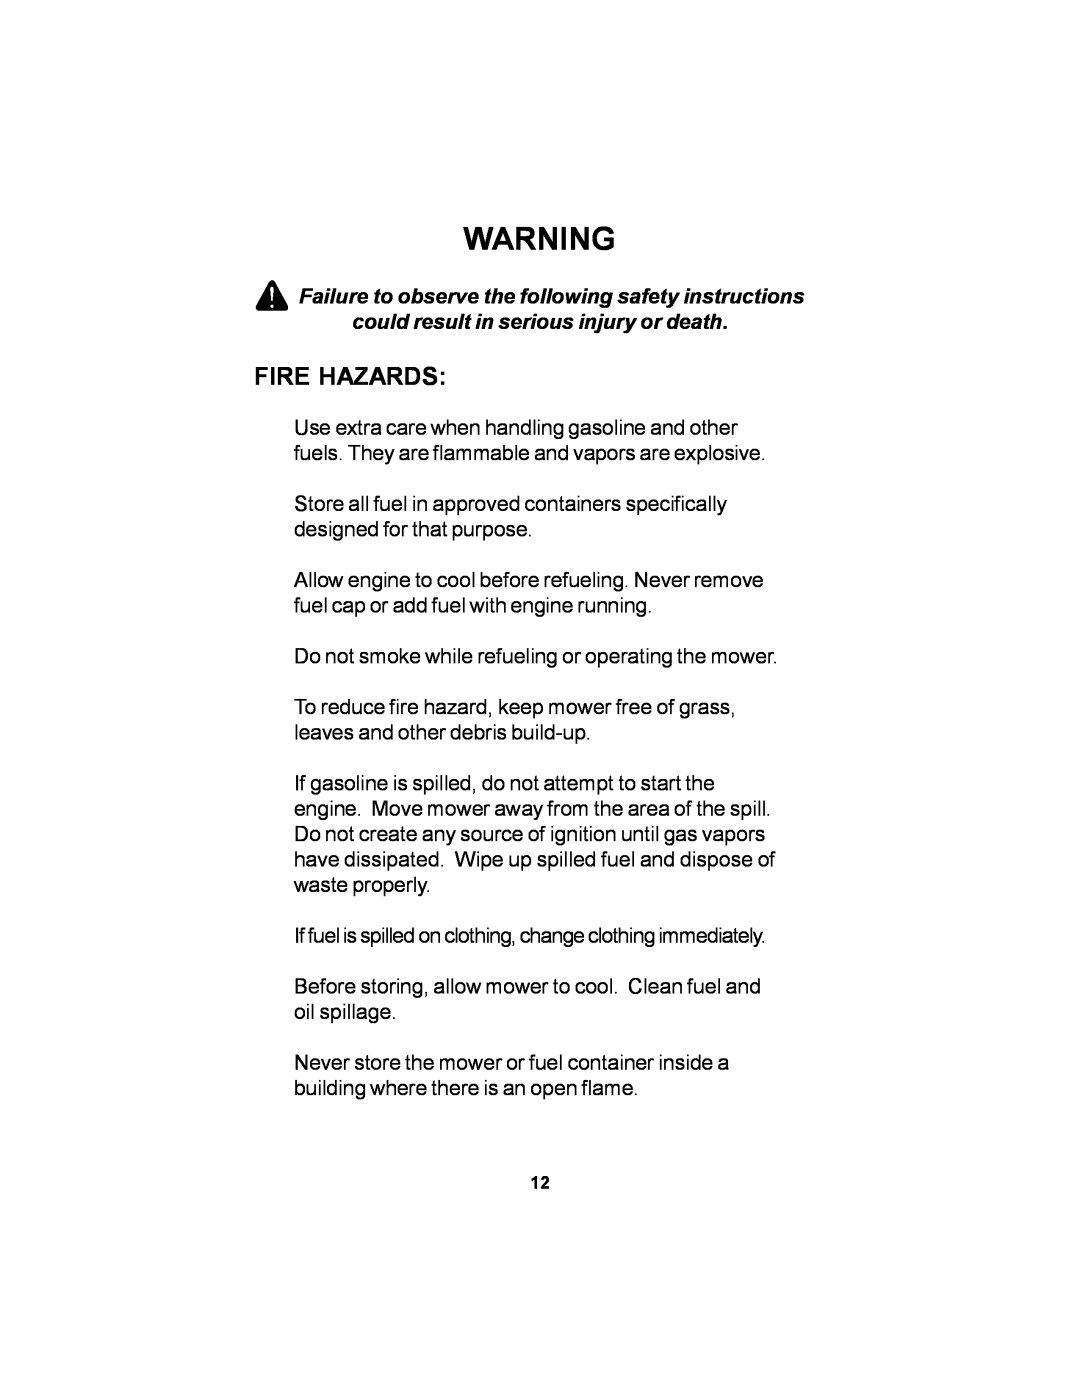 Dixon 14295-1005 manual Fire Hazards 